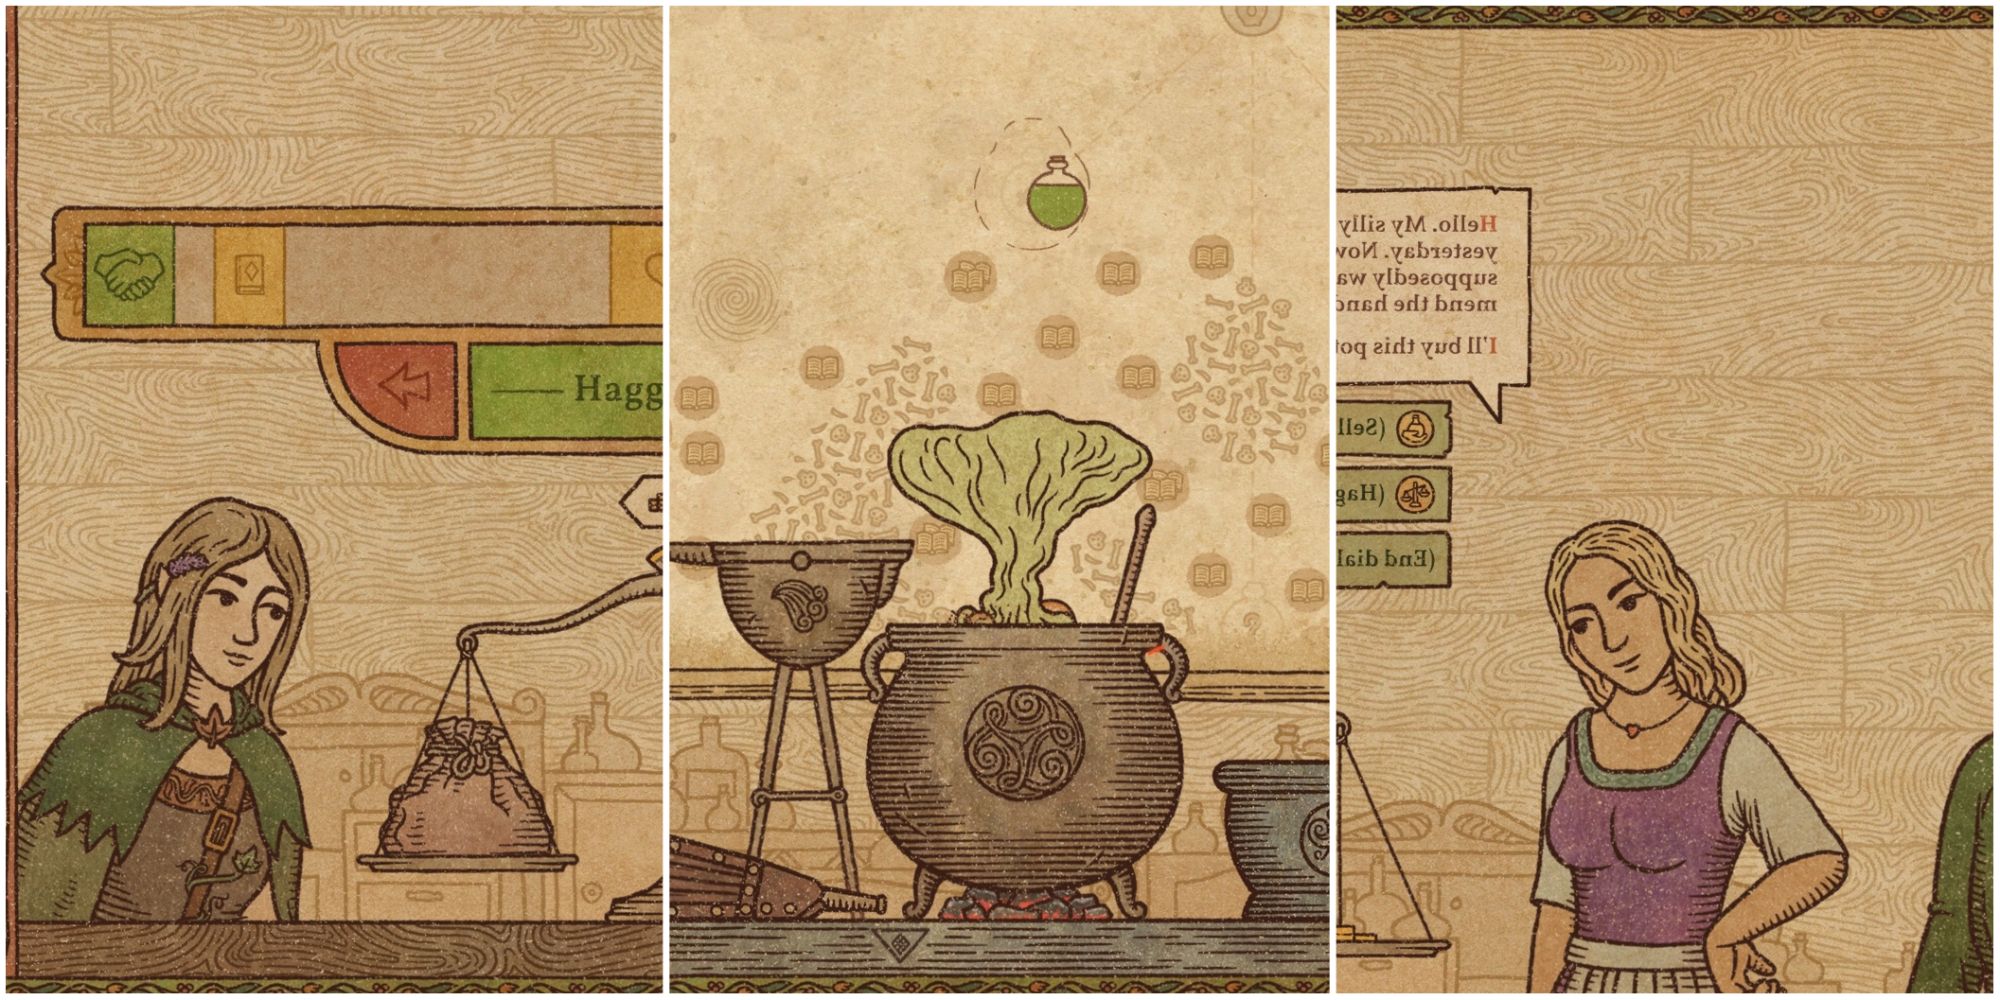 potion craft split image of a merchant, pot, and customer